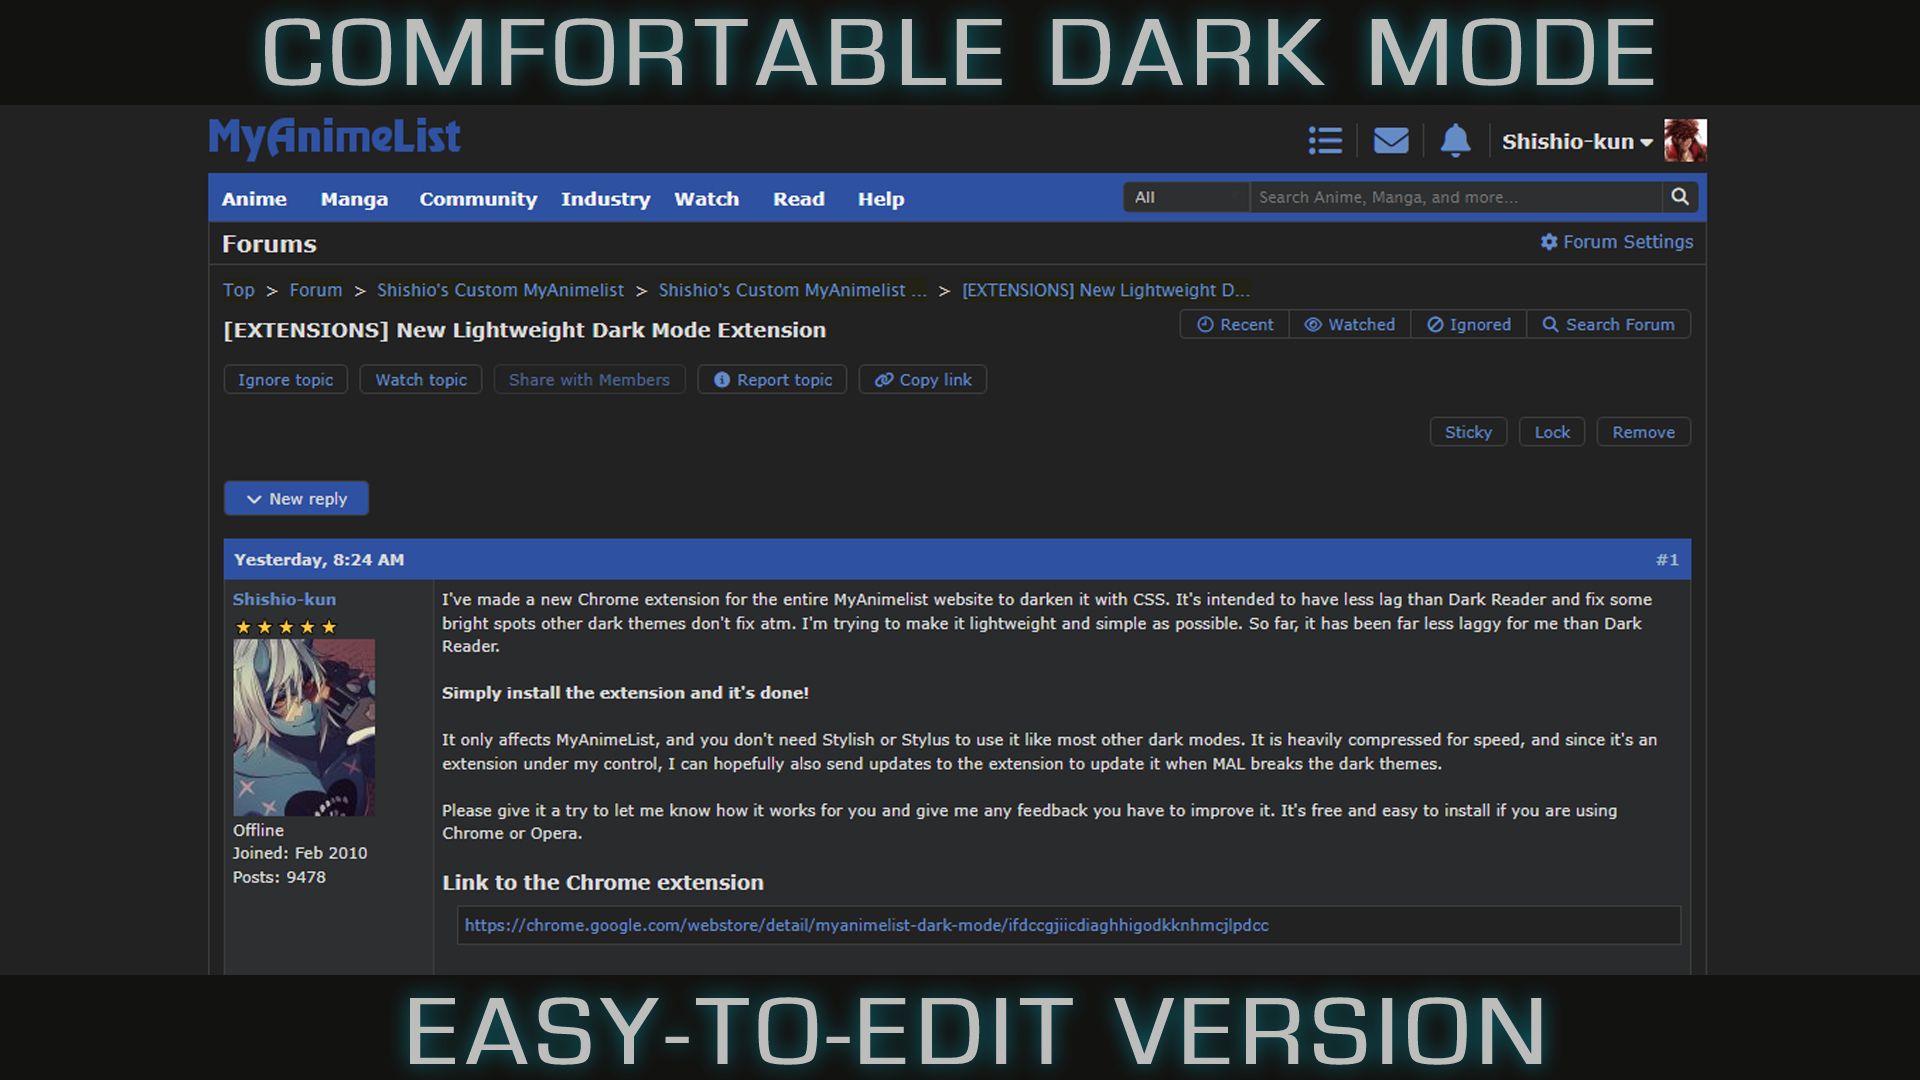 Screenshot of Comfortable Dark Mode - Easy To Edit